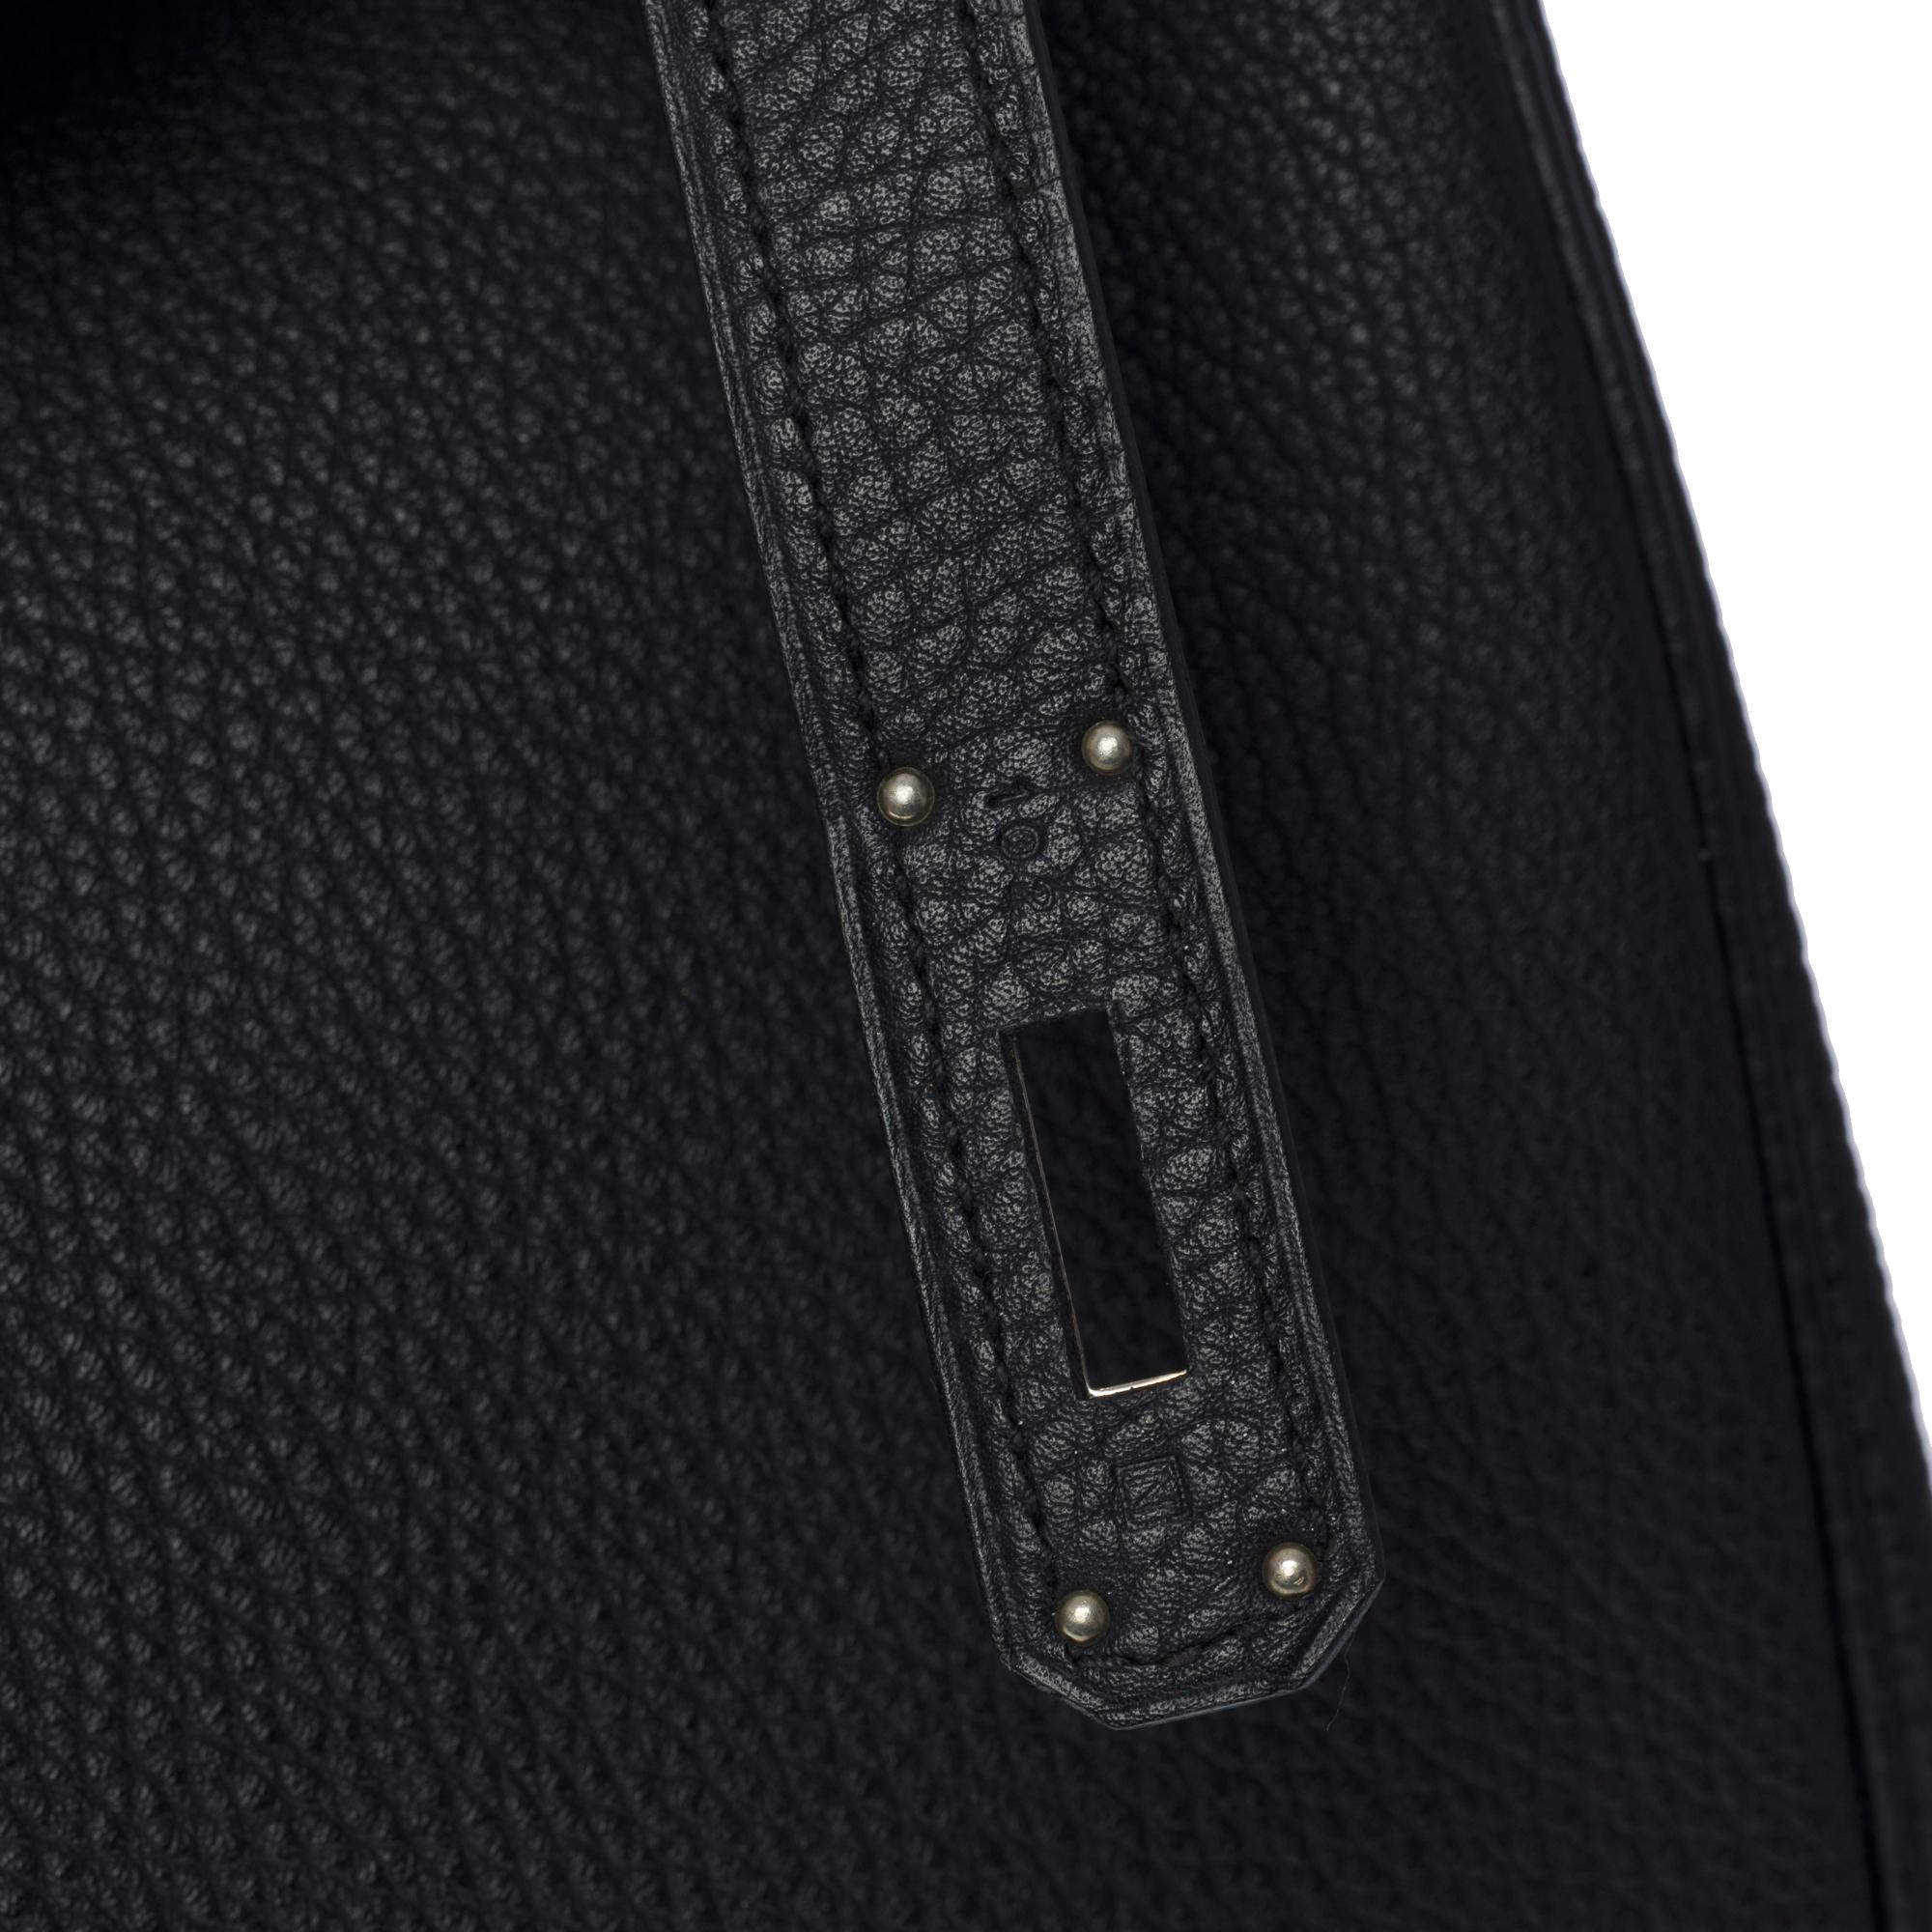 Stunning Hermes Birkin 40cm handbag in Black Togo leather, SHW 2